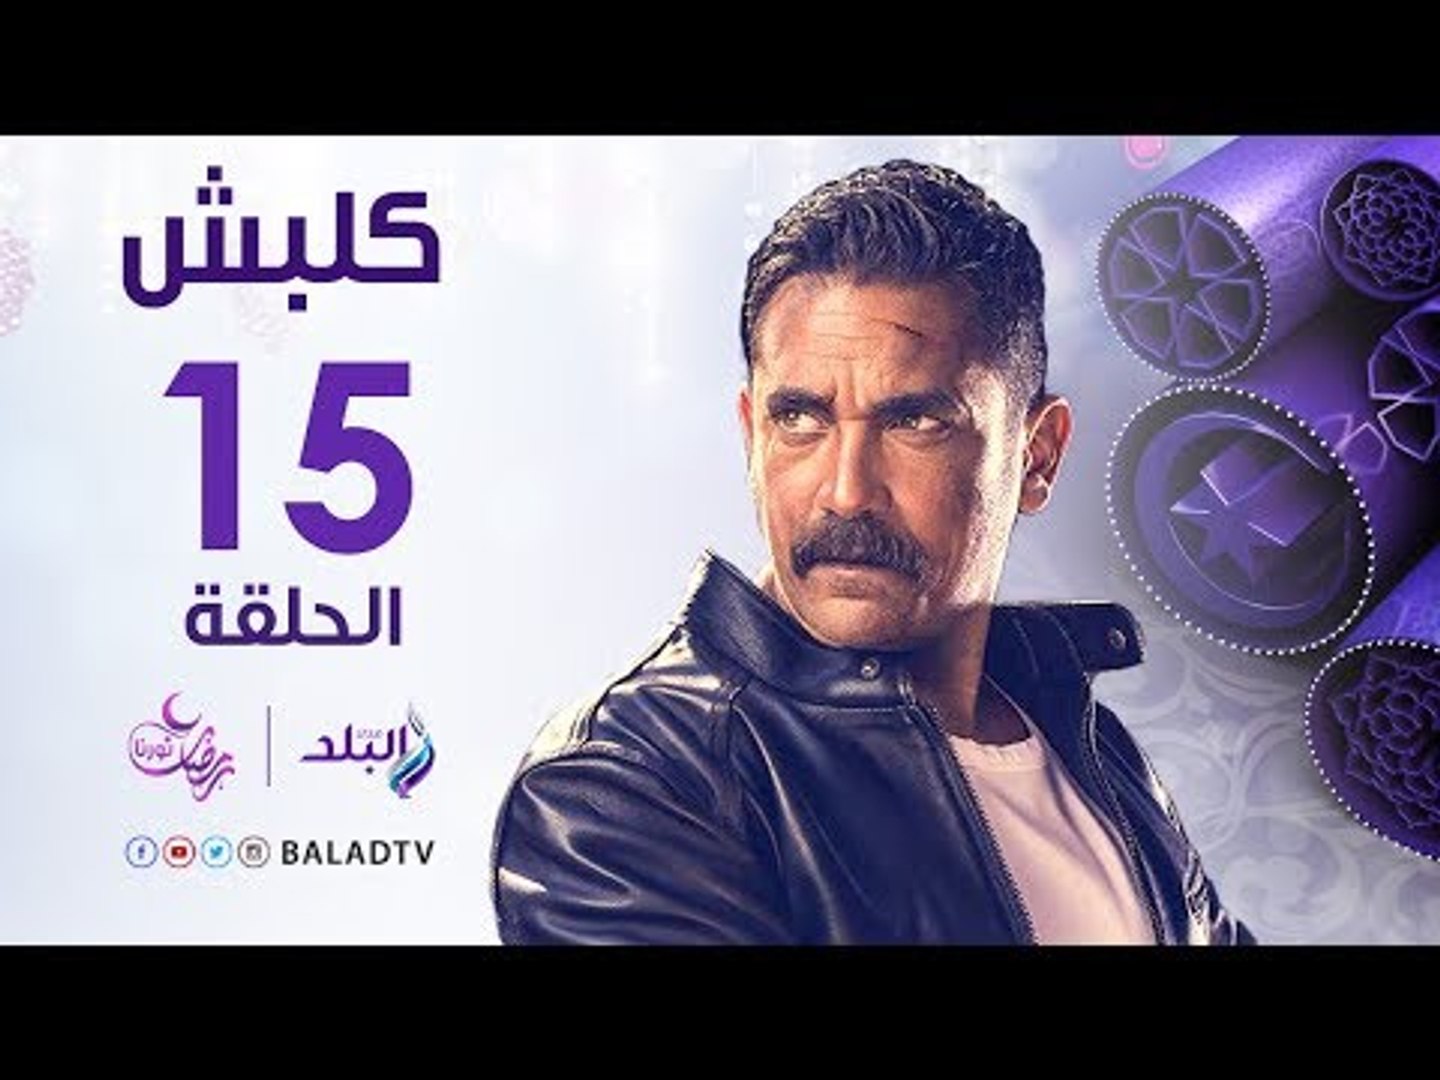 topánka publicita Vlak كلبش ٣ الحلقة ١٥ Majestátne prebývať doslovne